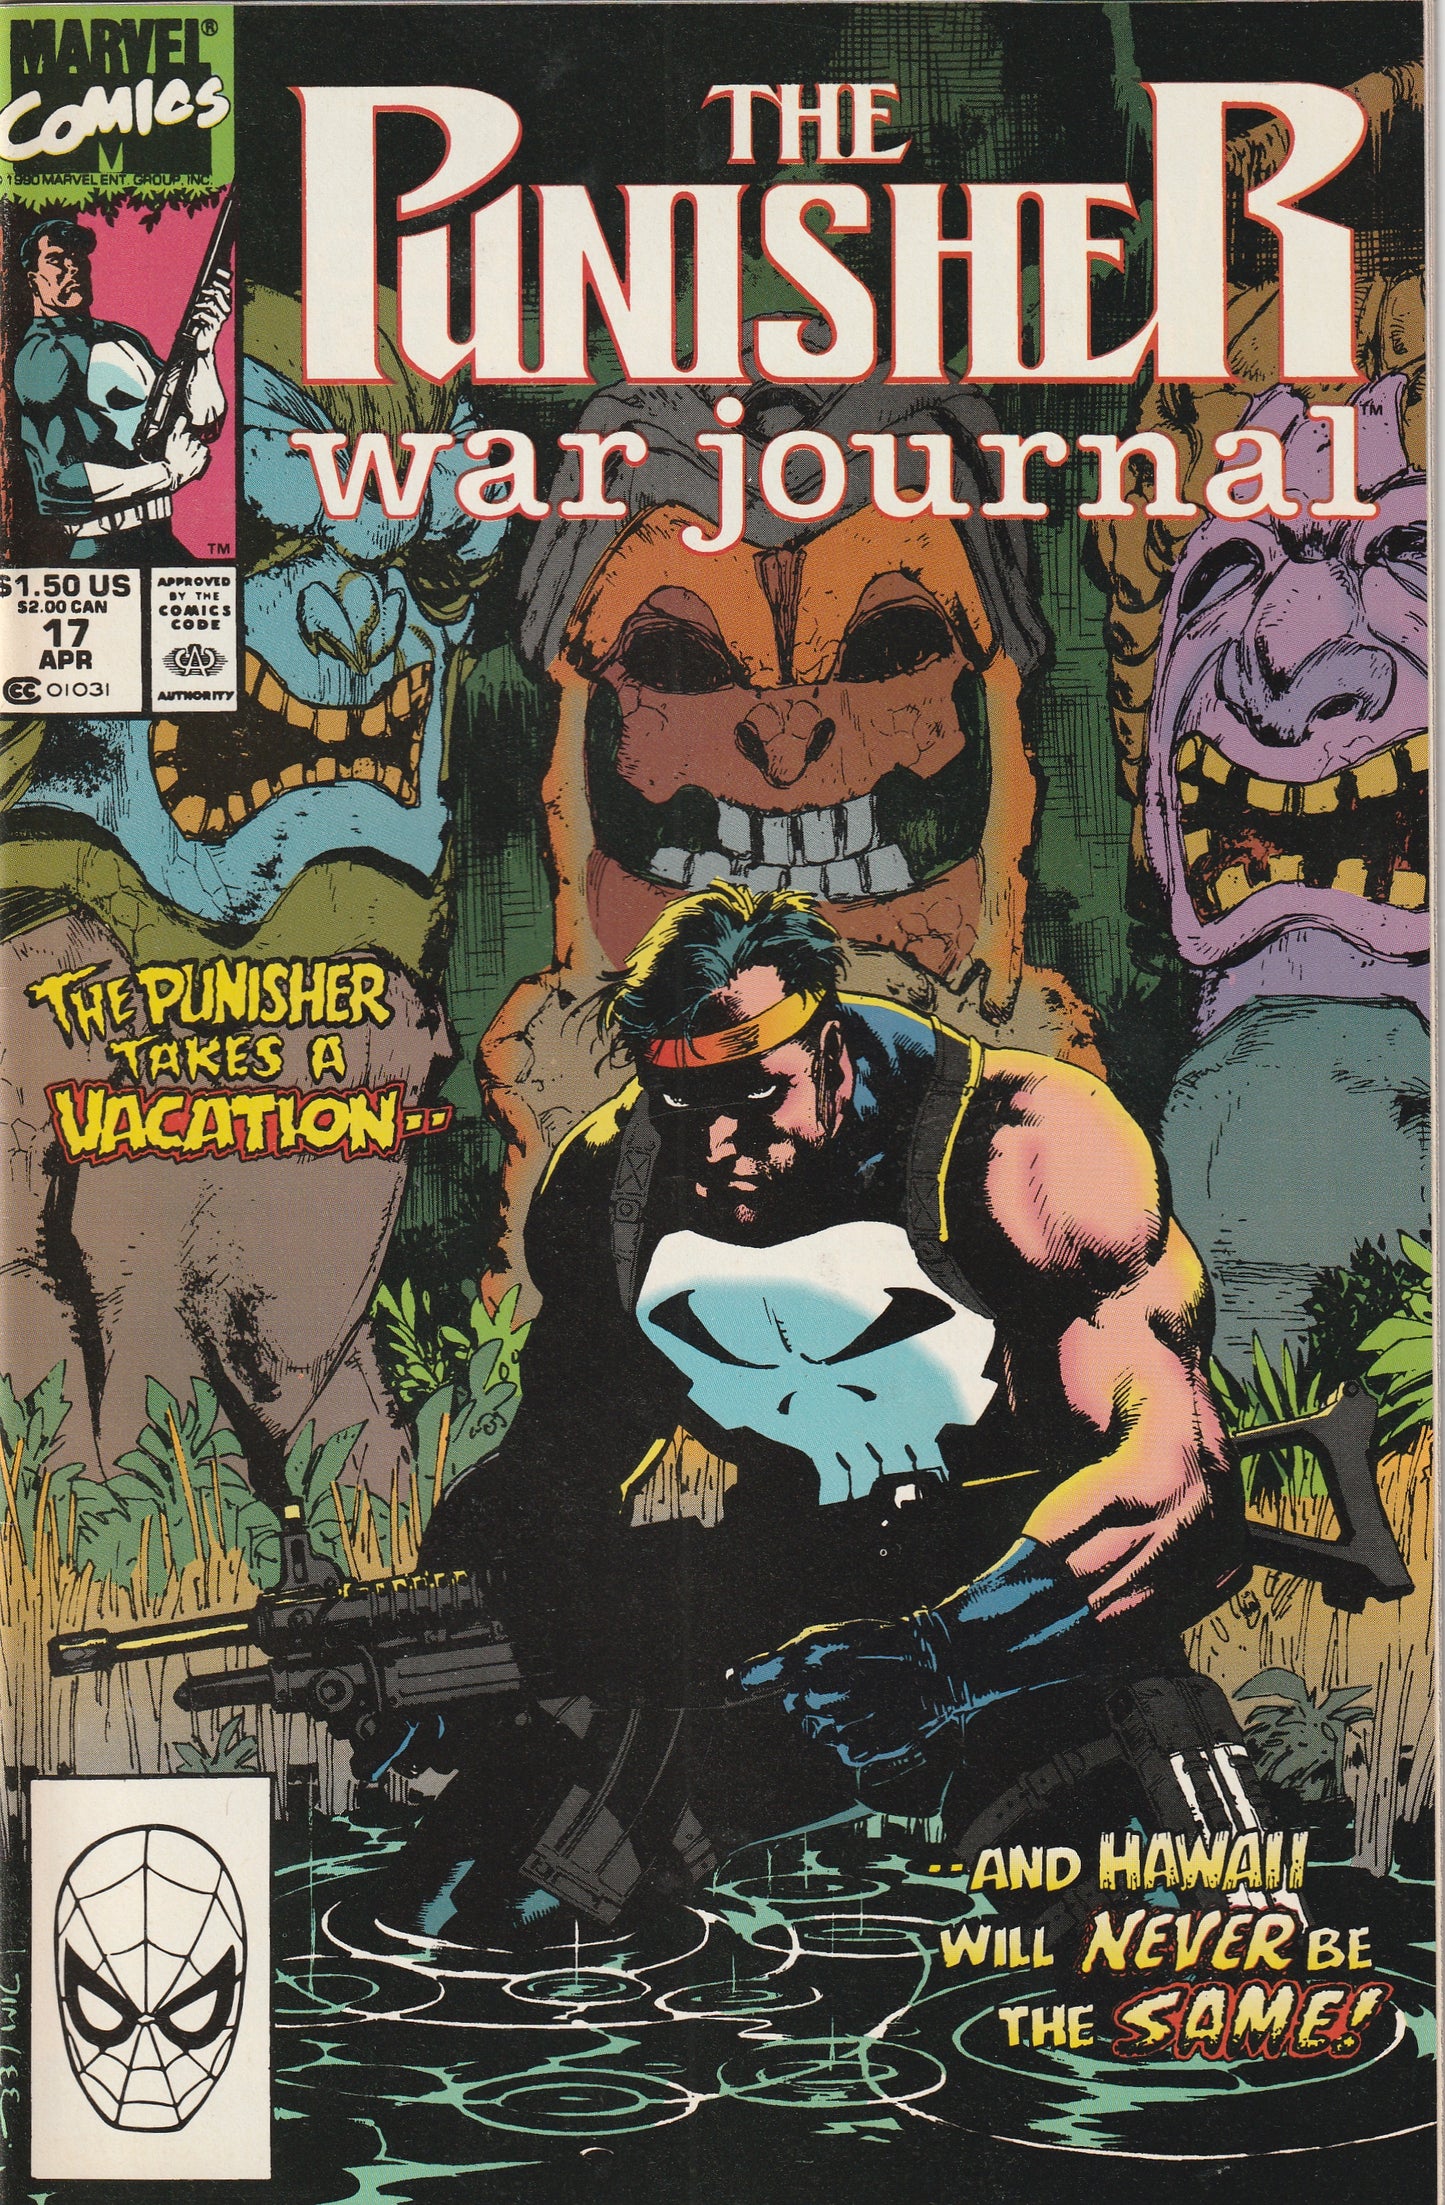 Punisher War Journal #17 (1990) - Jim Lee cover